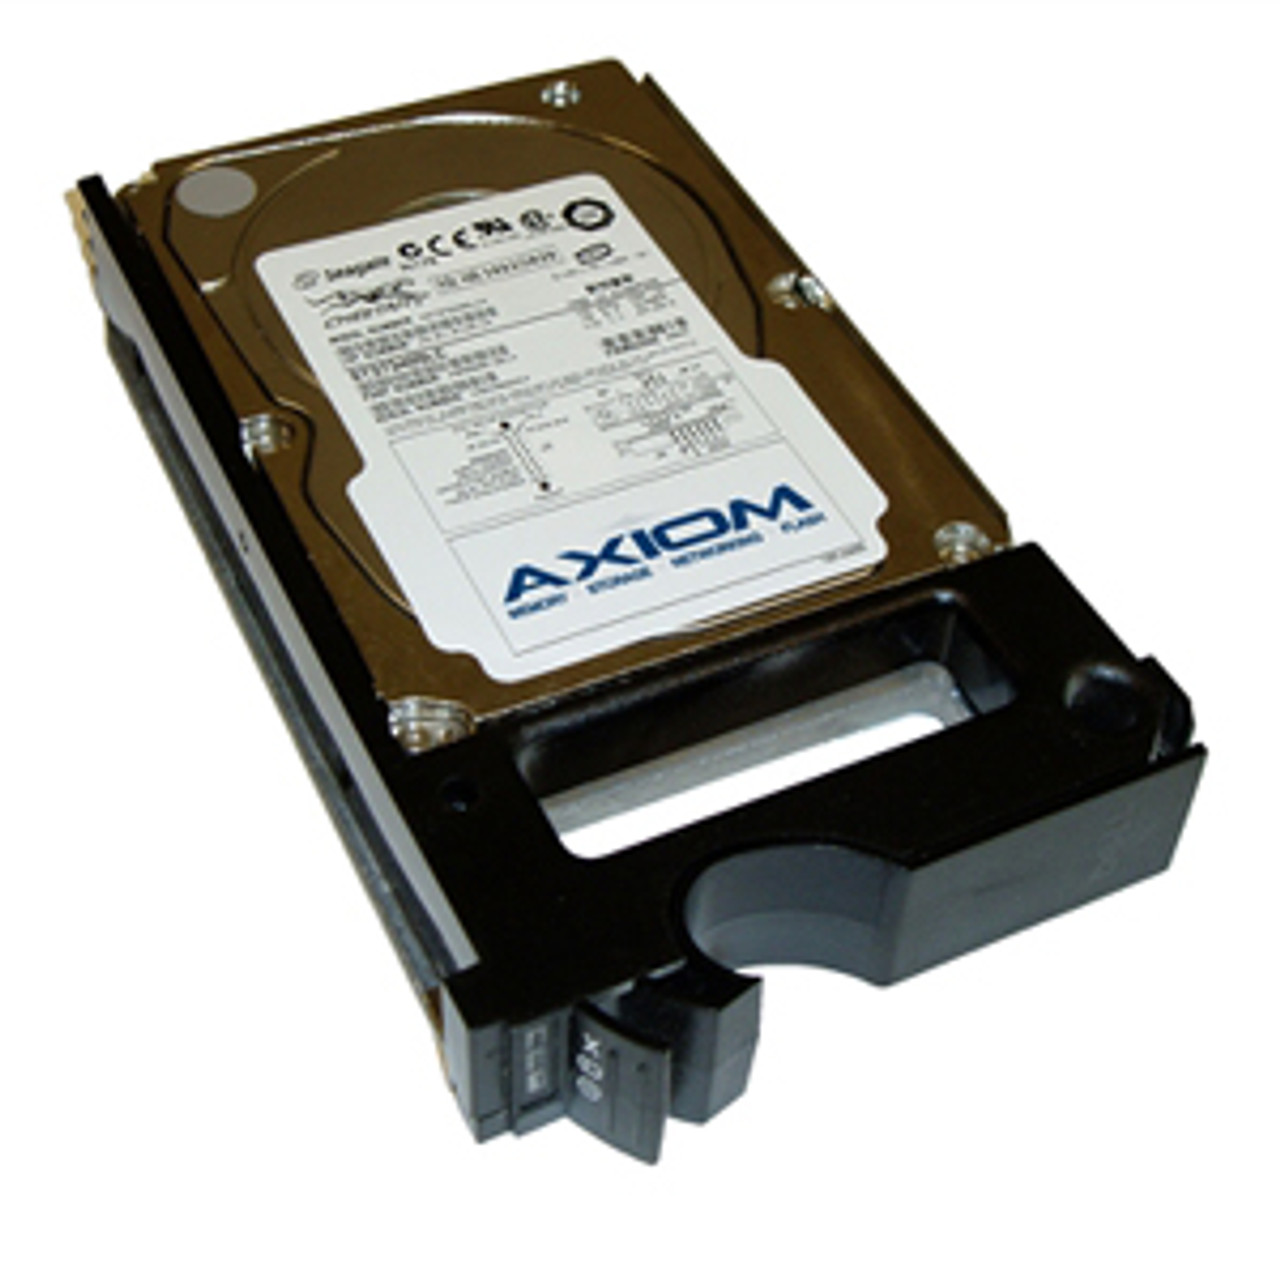 40K1023-AXA - Axiom 73 GB 3.5 Internal Hard Drive - SCSI - 10000 rpm - Hot Swappable